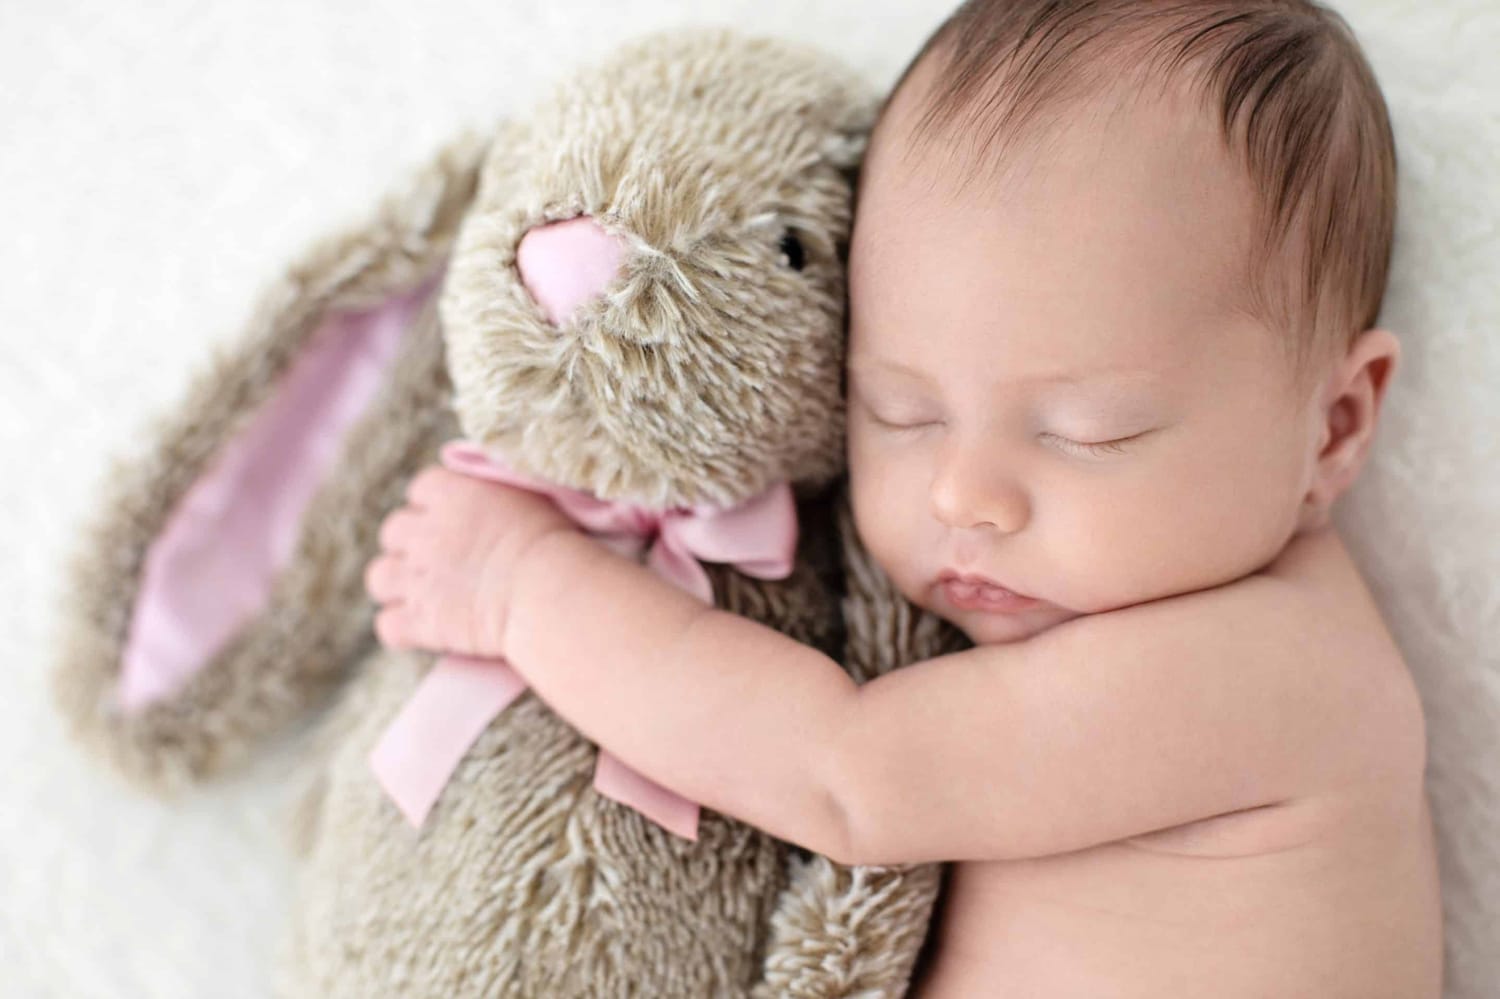 A newborn baby holds a stuffed rabbit.